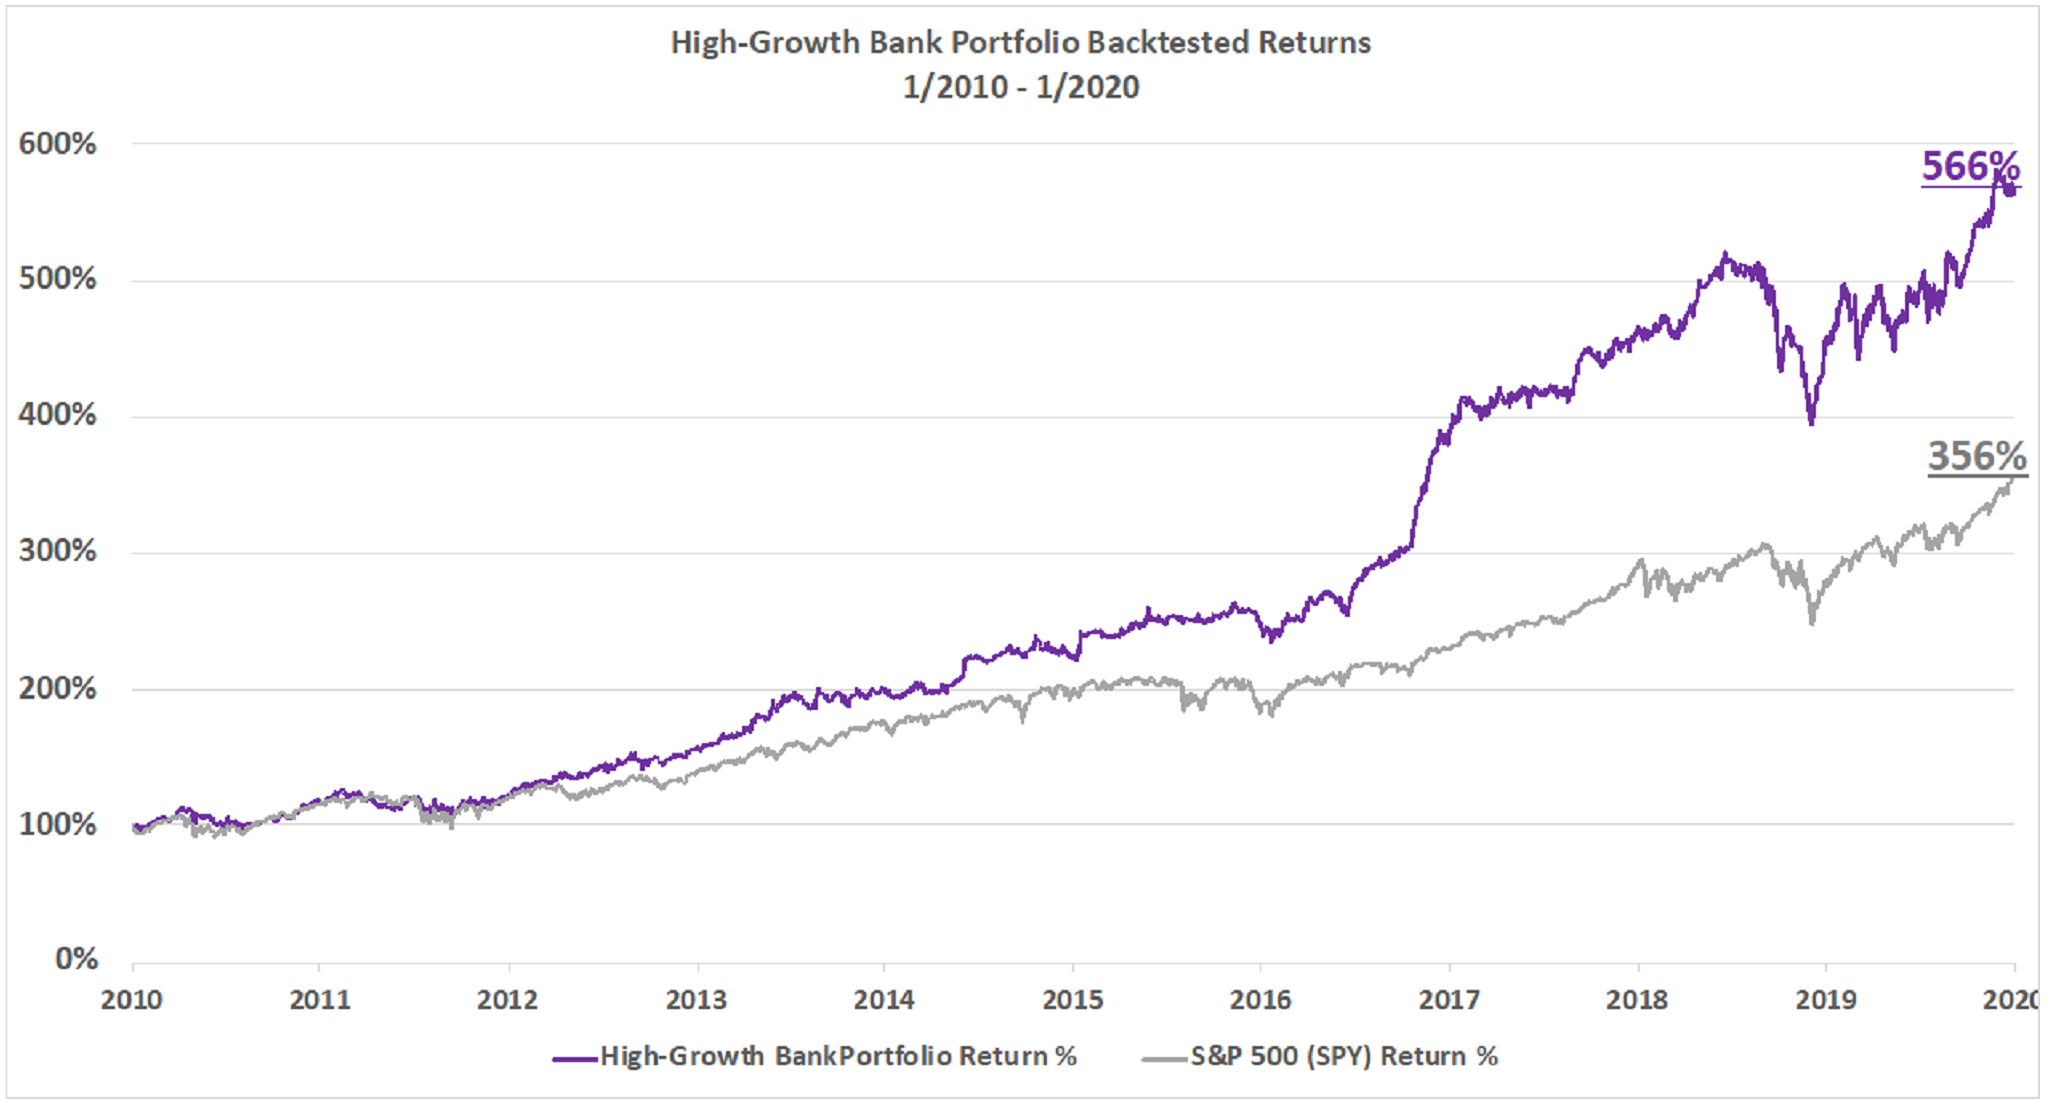 High-Growth Bank Portfolio Backtested Returns